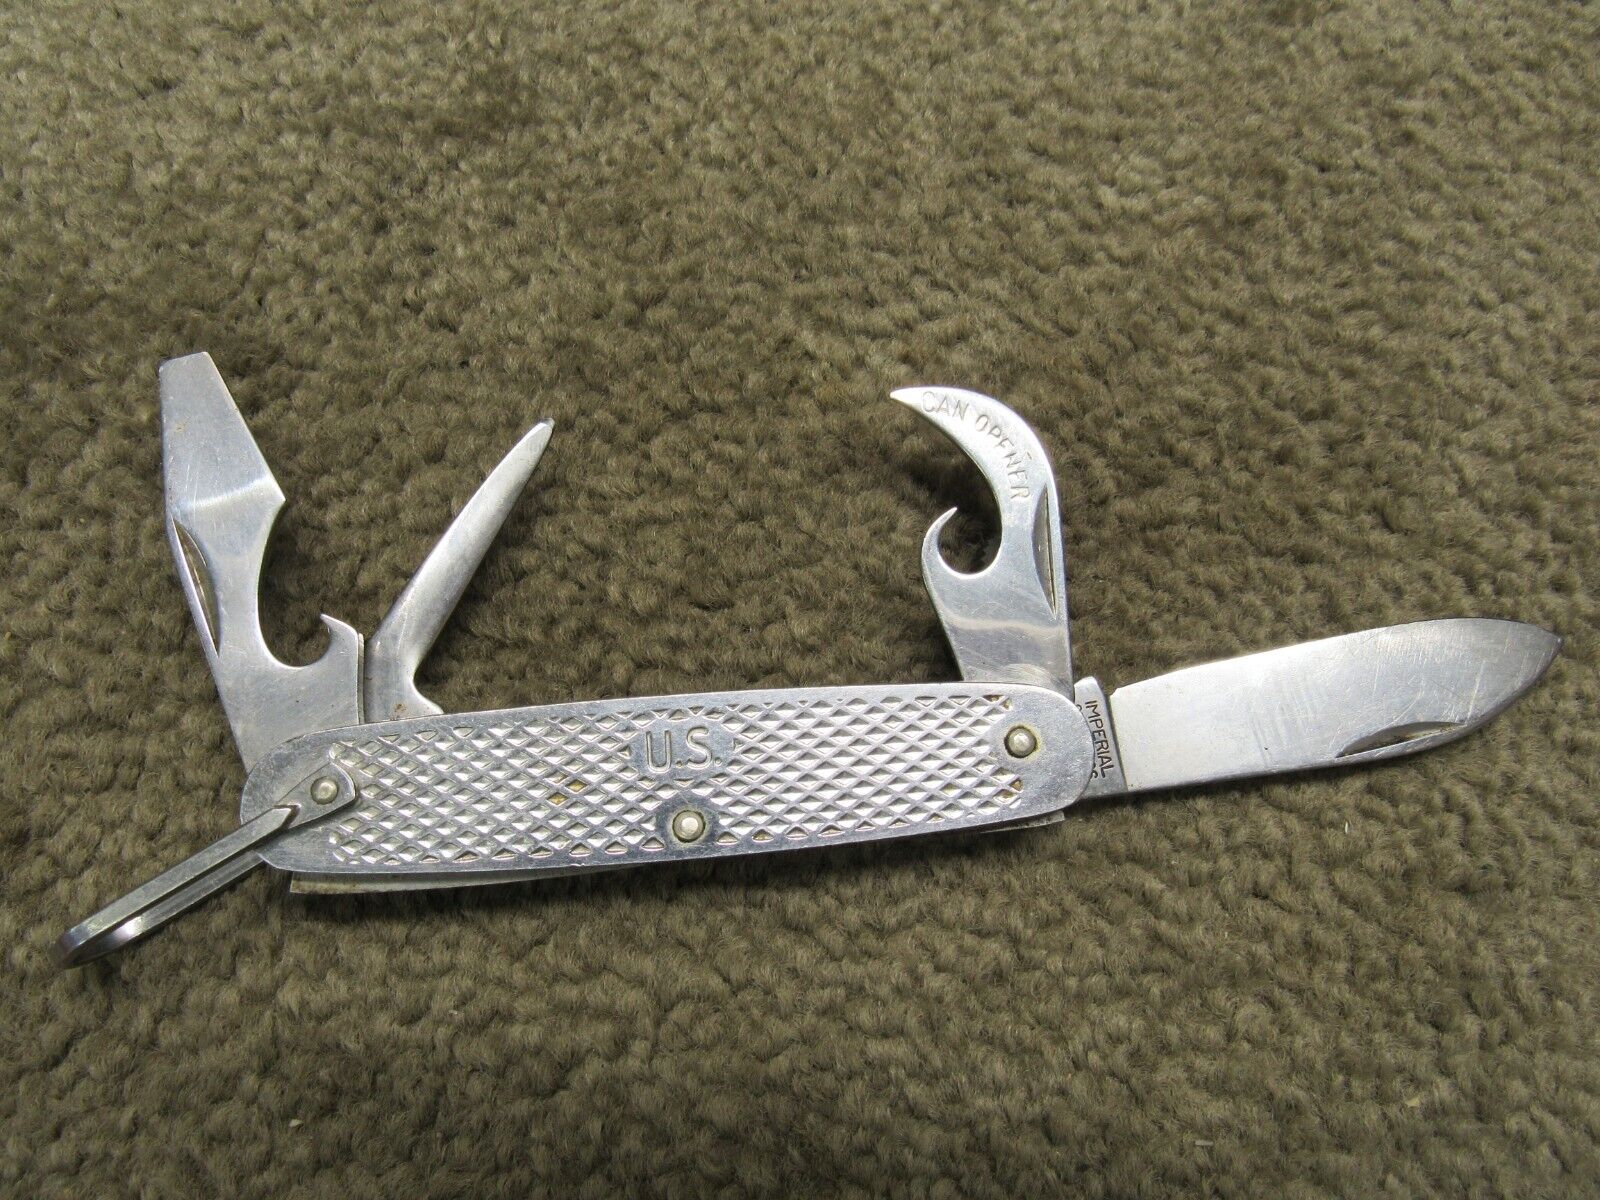 US Imperial Vietnam Era Pocket Knife 4 Blade 1975 Dated